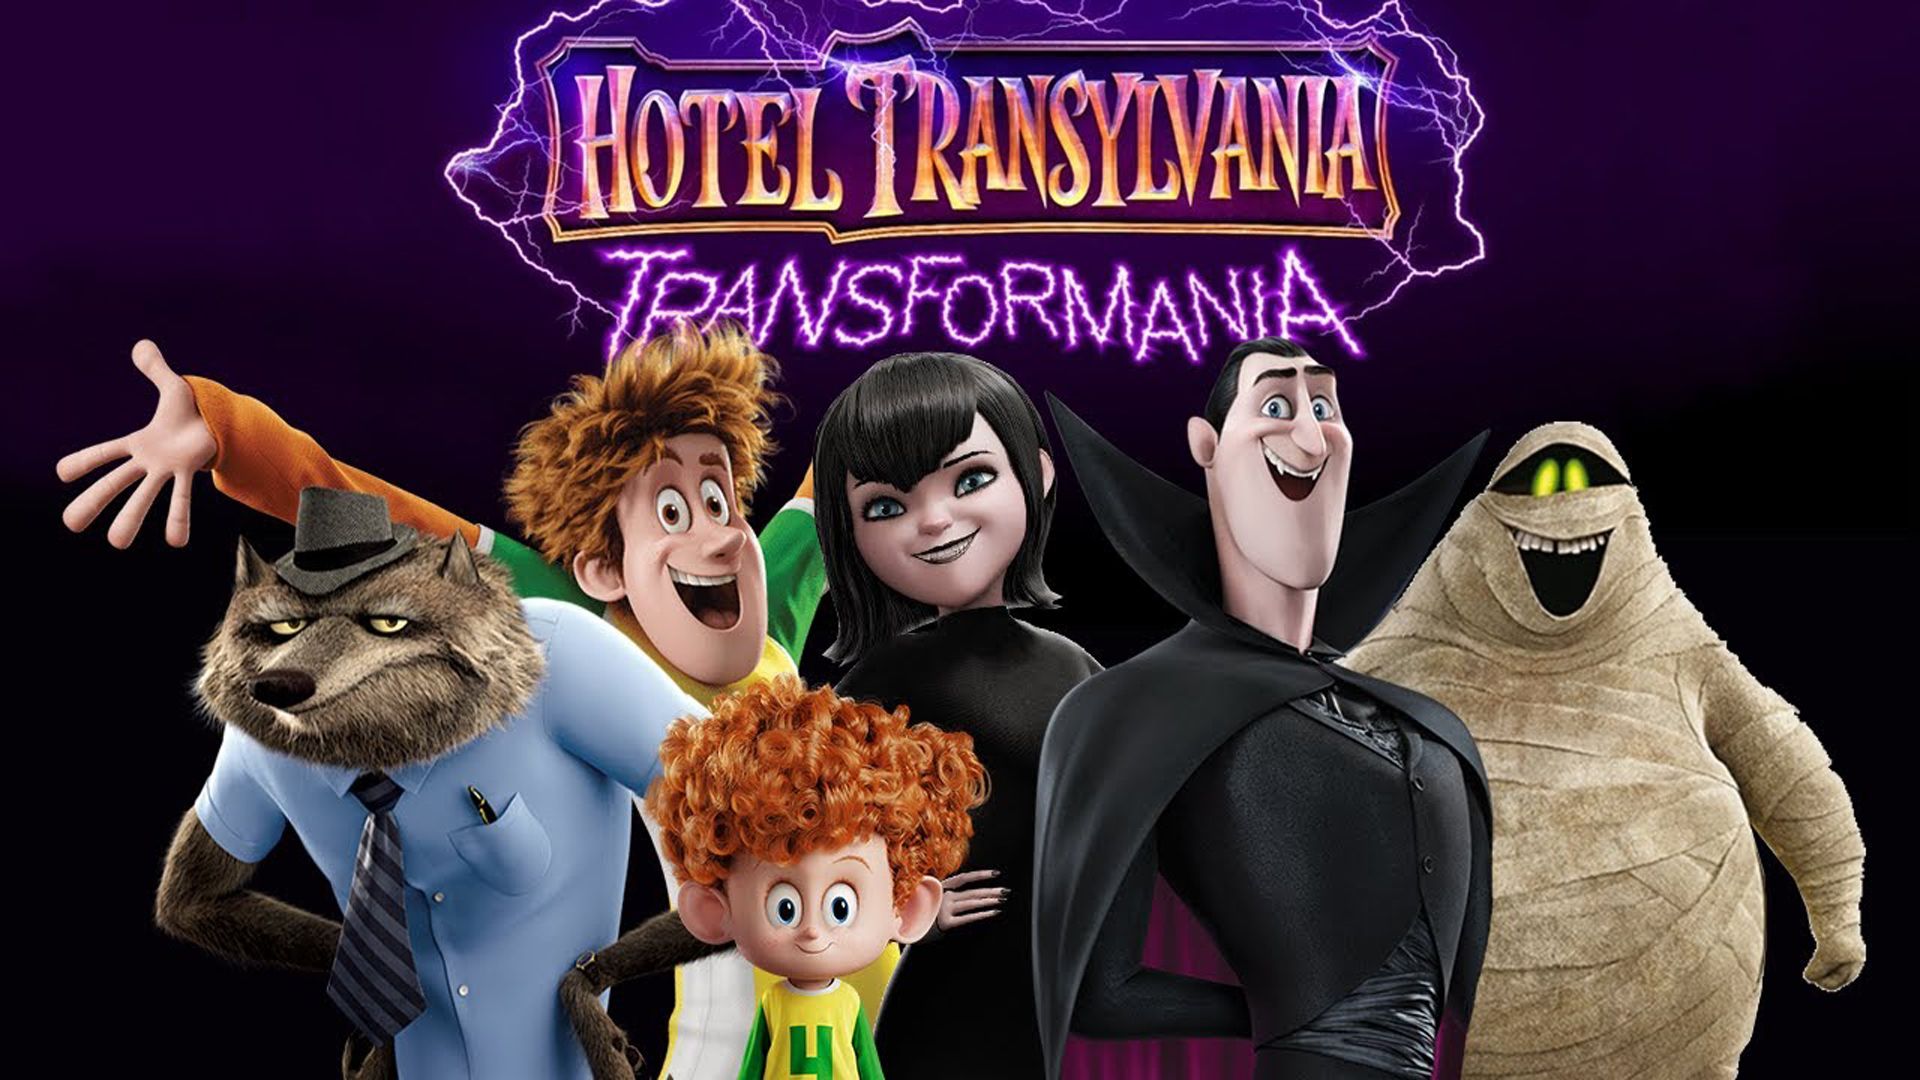 Hotel Transylvania: Transformania Picture by many23hn